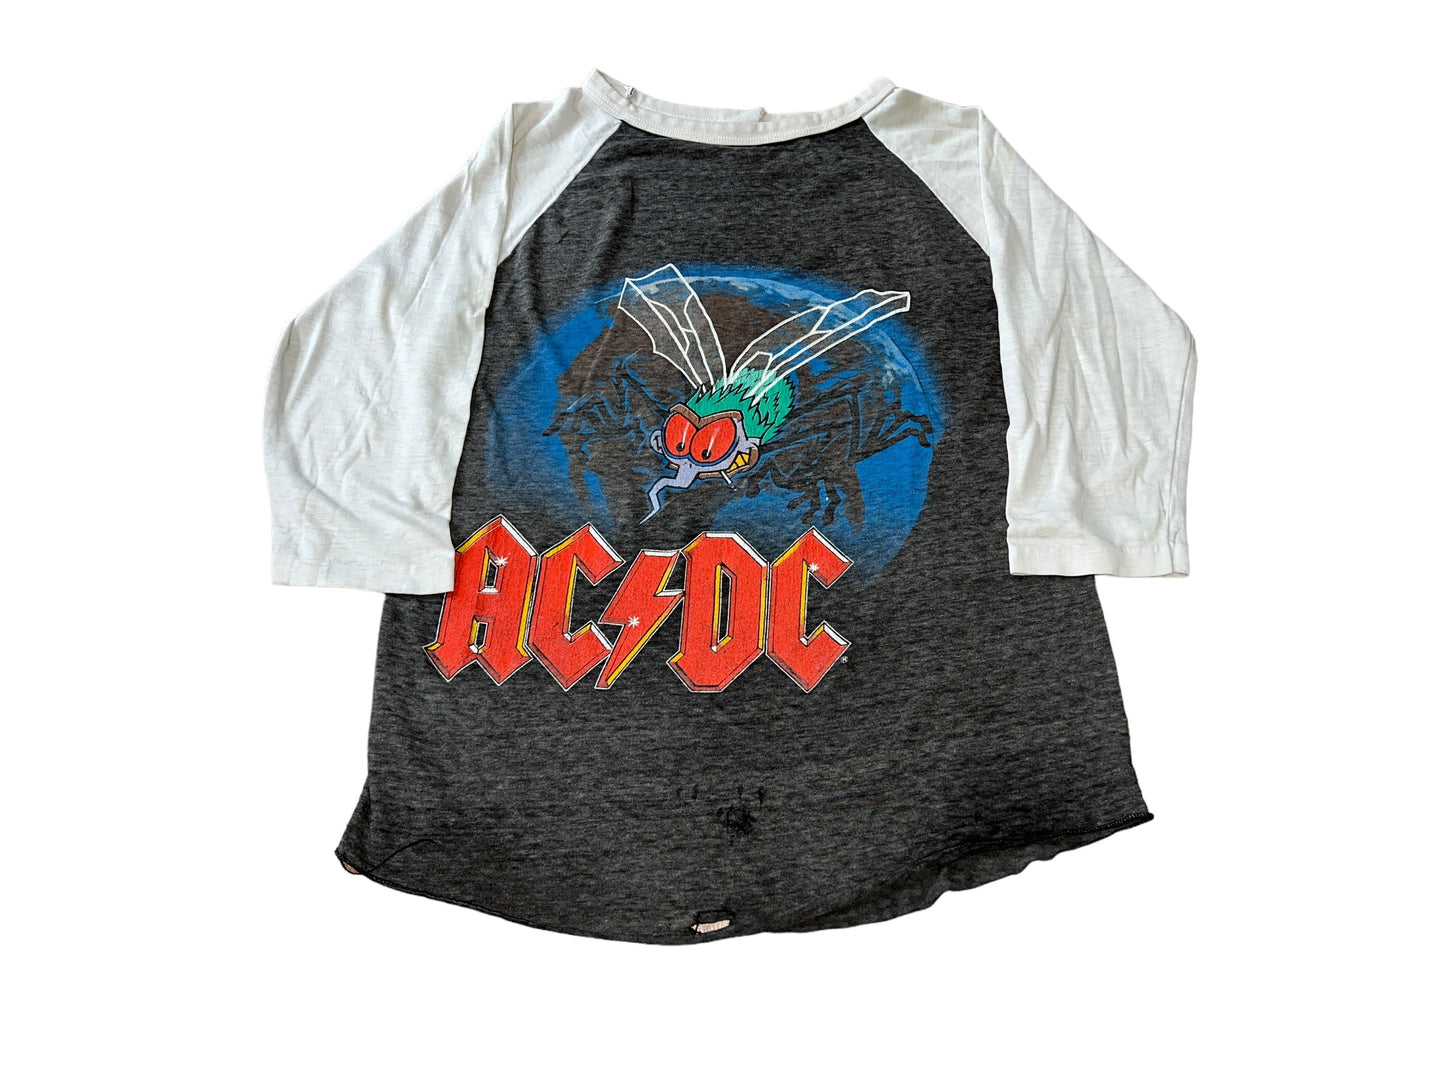 Vintage 1985 ACDC Shirt